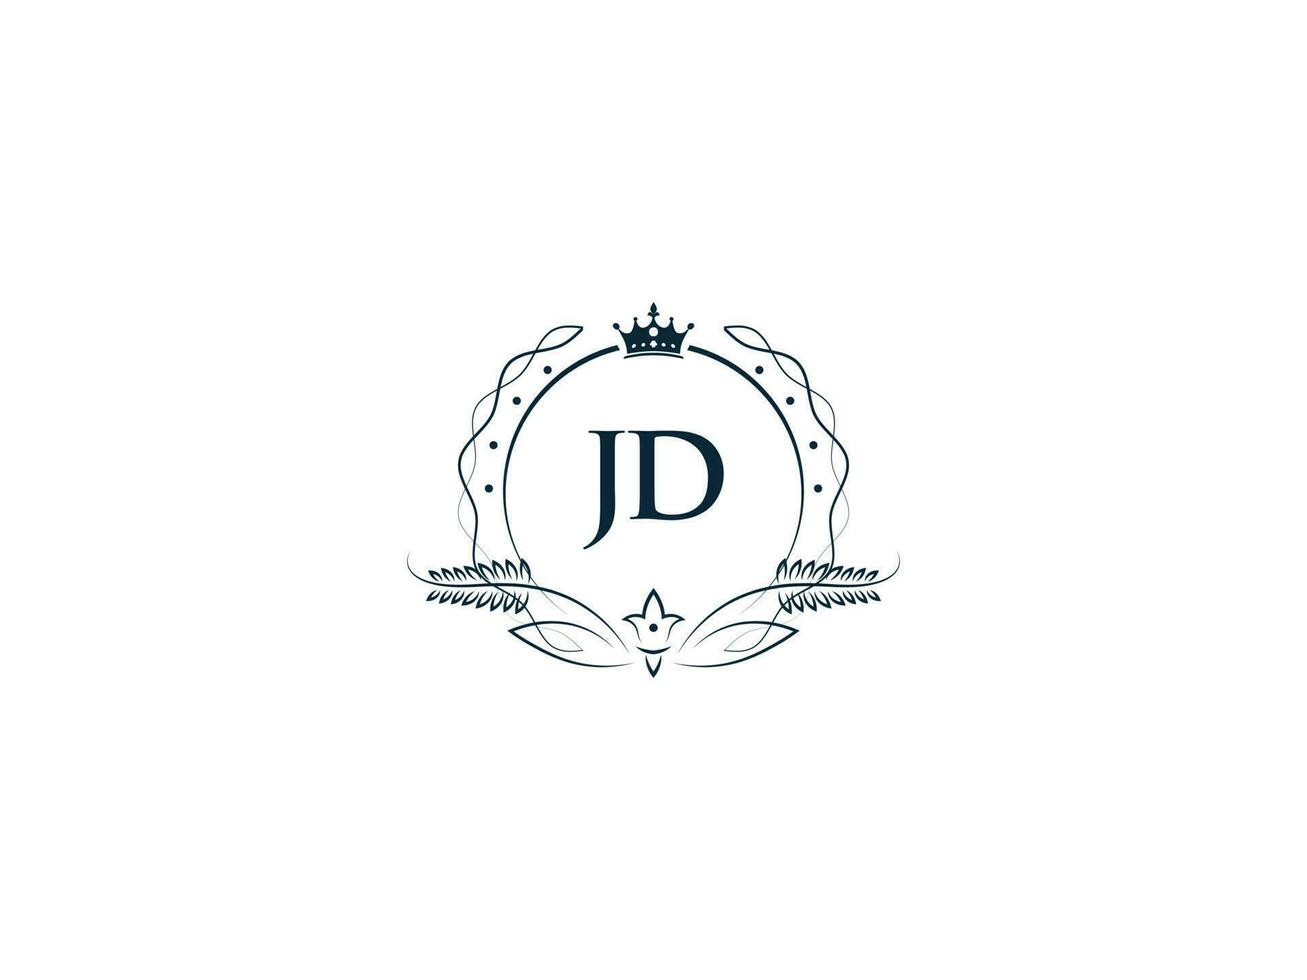 Monogram Jd Feminine Company Logo Design, Luxury Jd dj Royal Crown Logo Icon vector